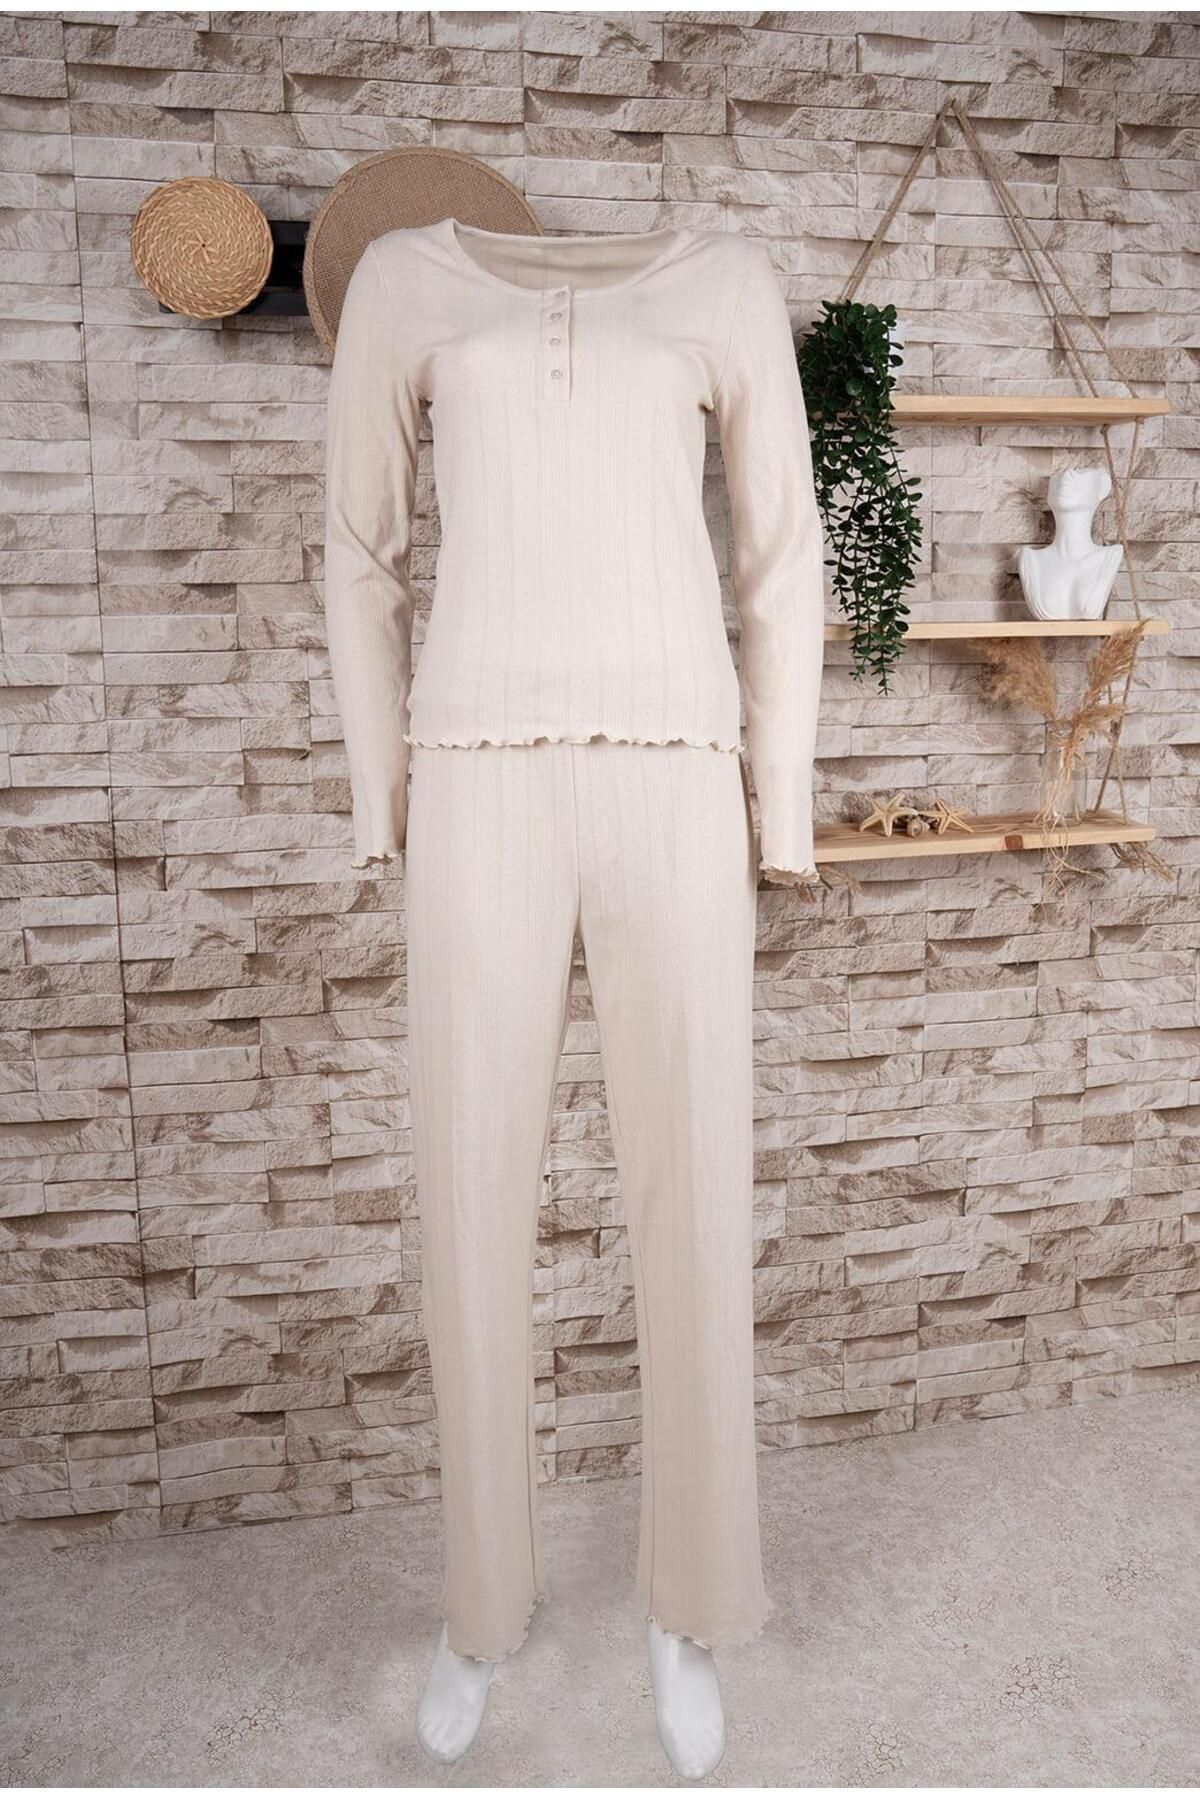 Baveno Home Kadın Pijama & Ev Giyim Takımı